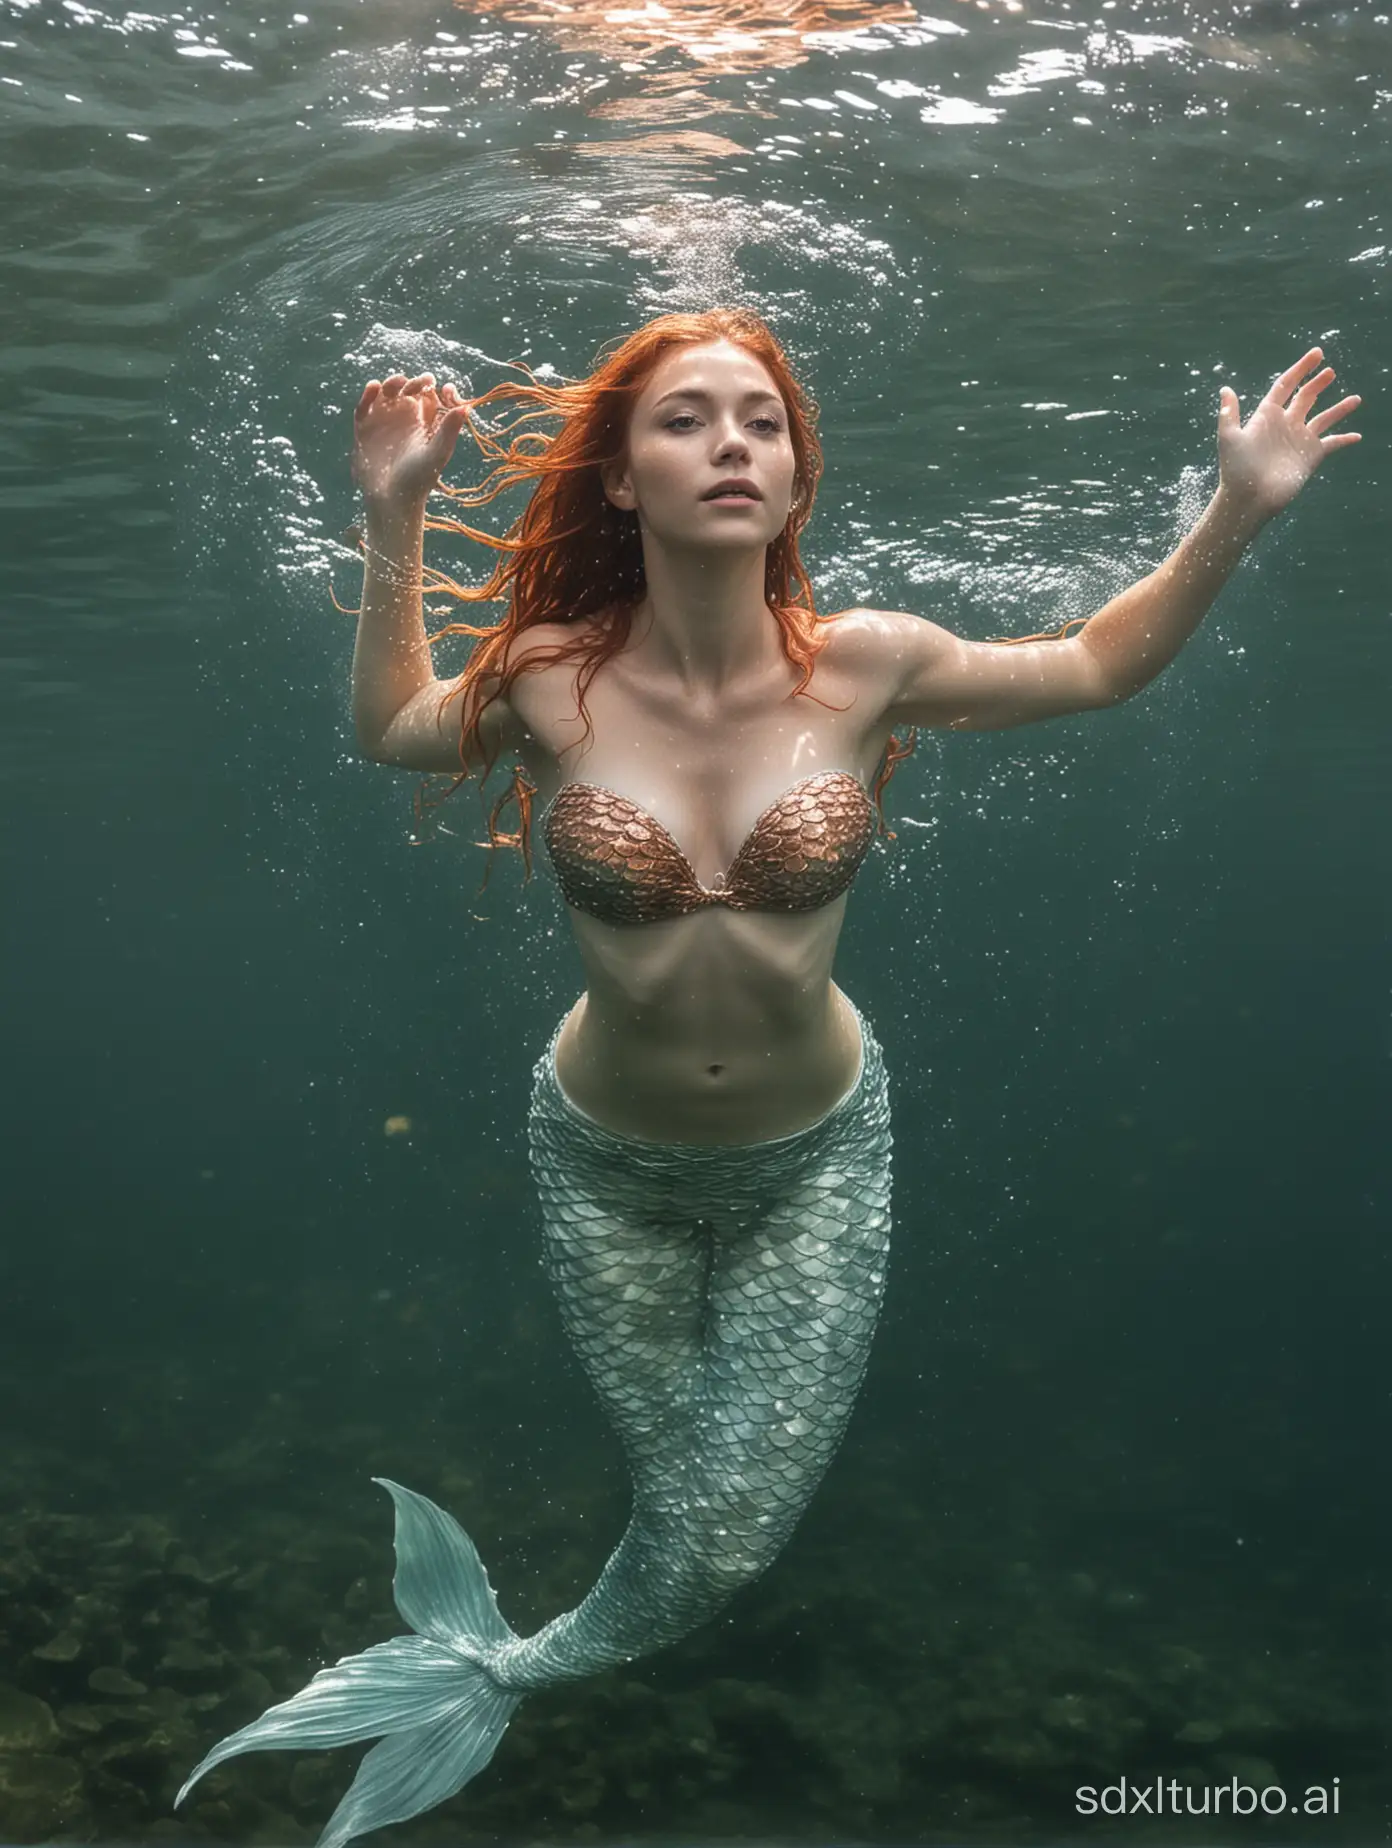 Graceful-Mermaid-Emerges-from-Crystal-Blue-Waters